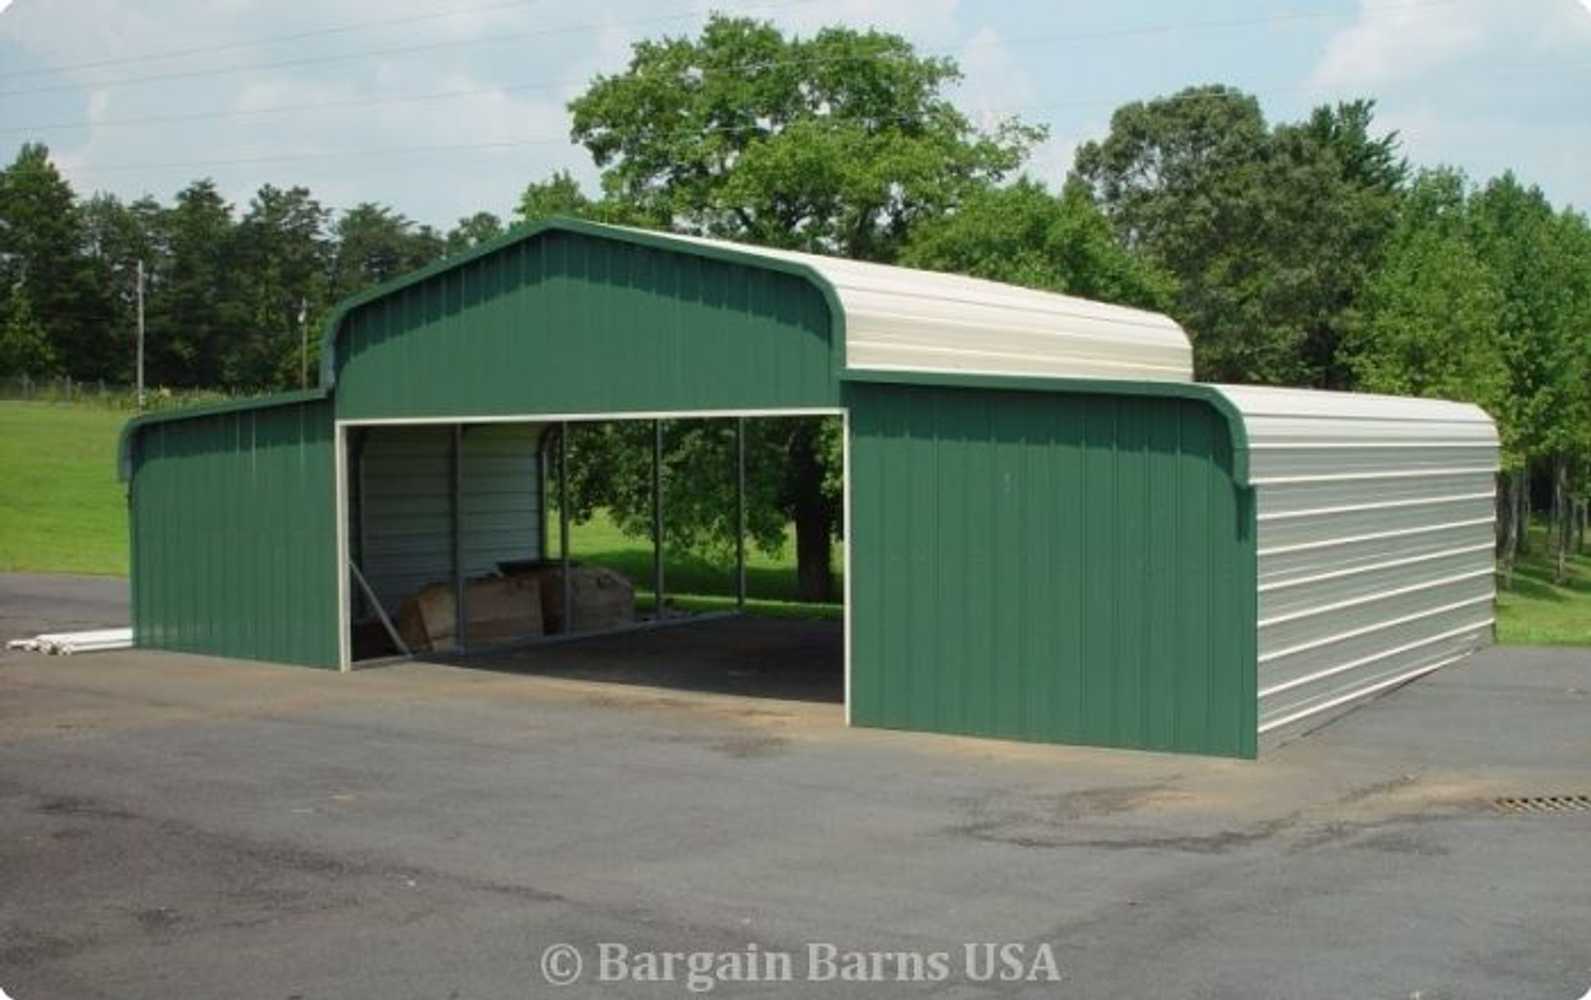 Photo(s) from Bargain Barns USA